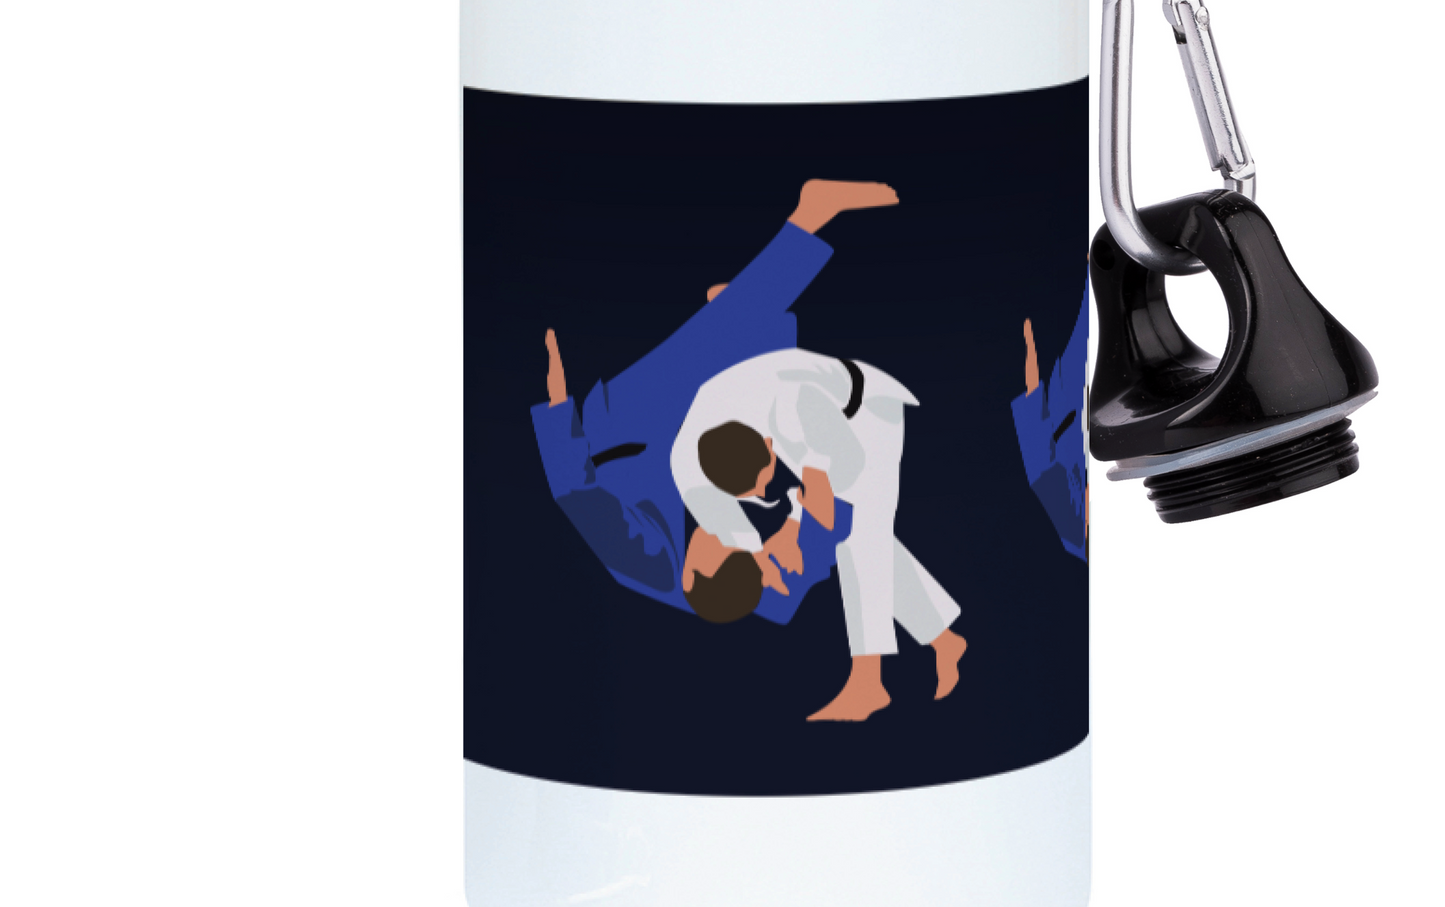 Gourde aluminium judo homme "Le judoka" - Personnalisable